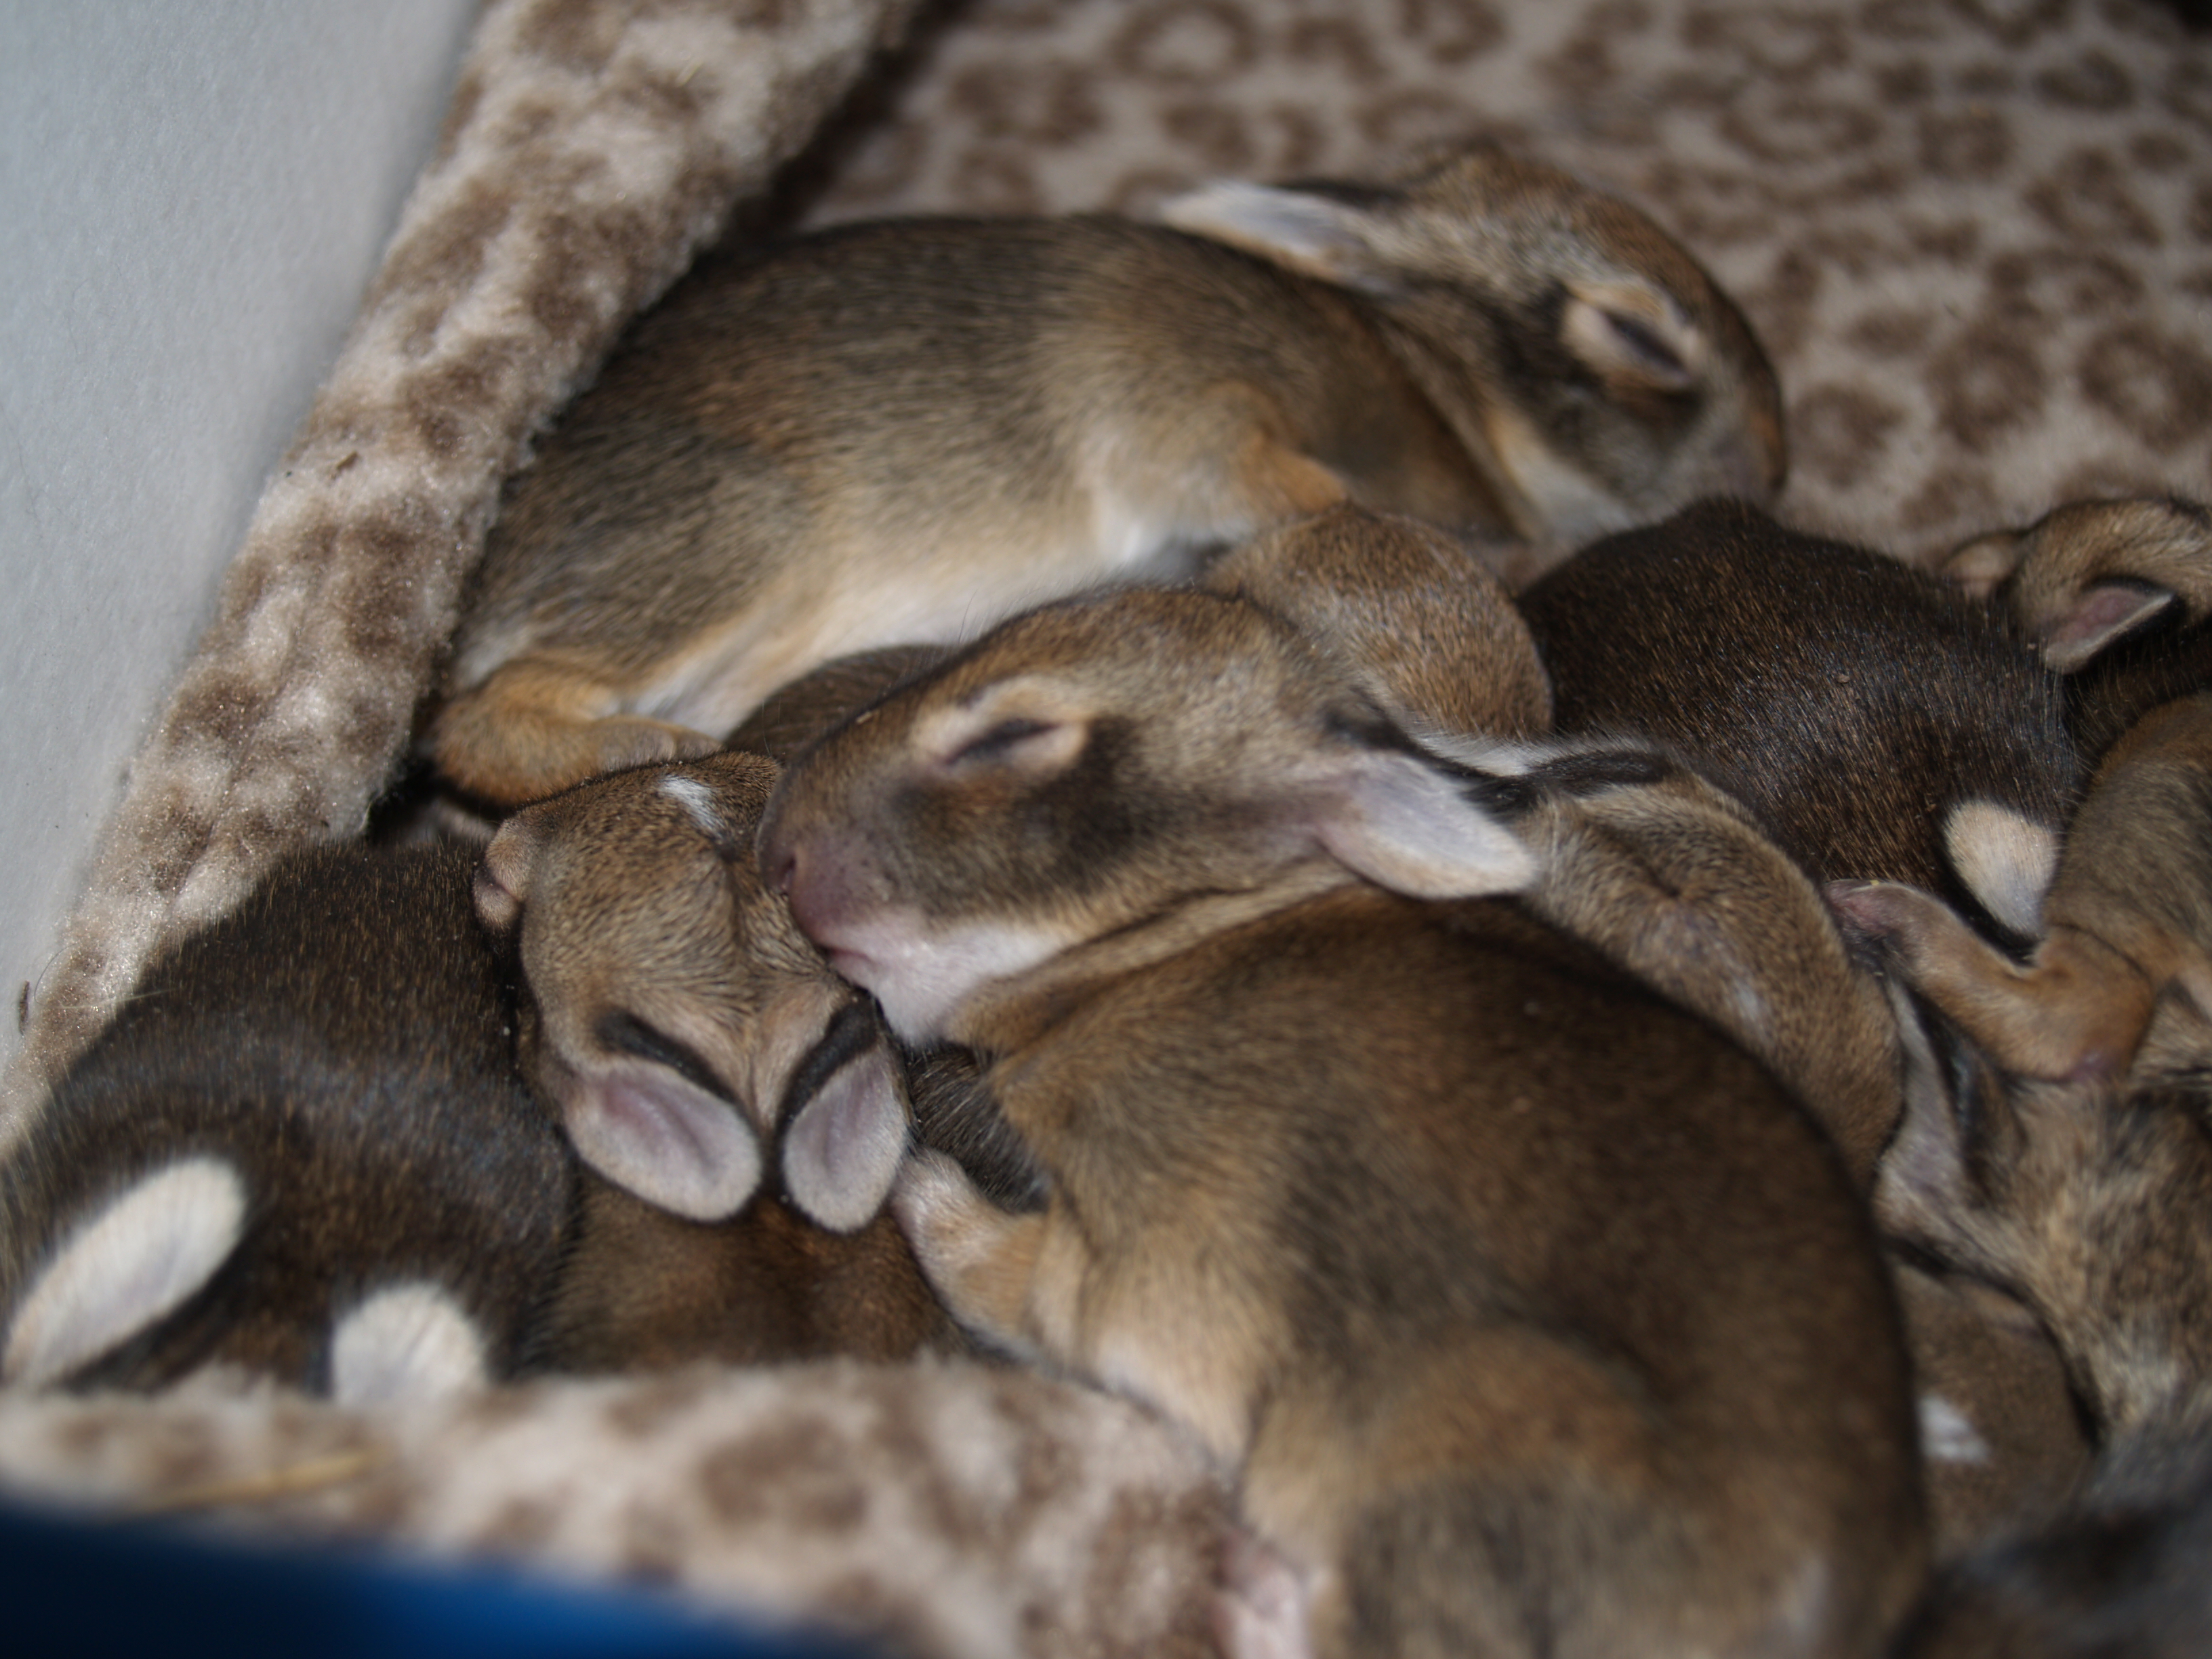 newborn bunny rabbits